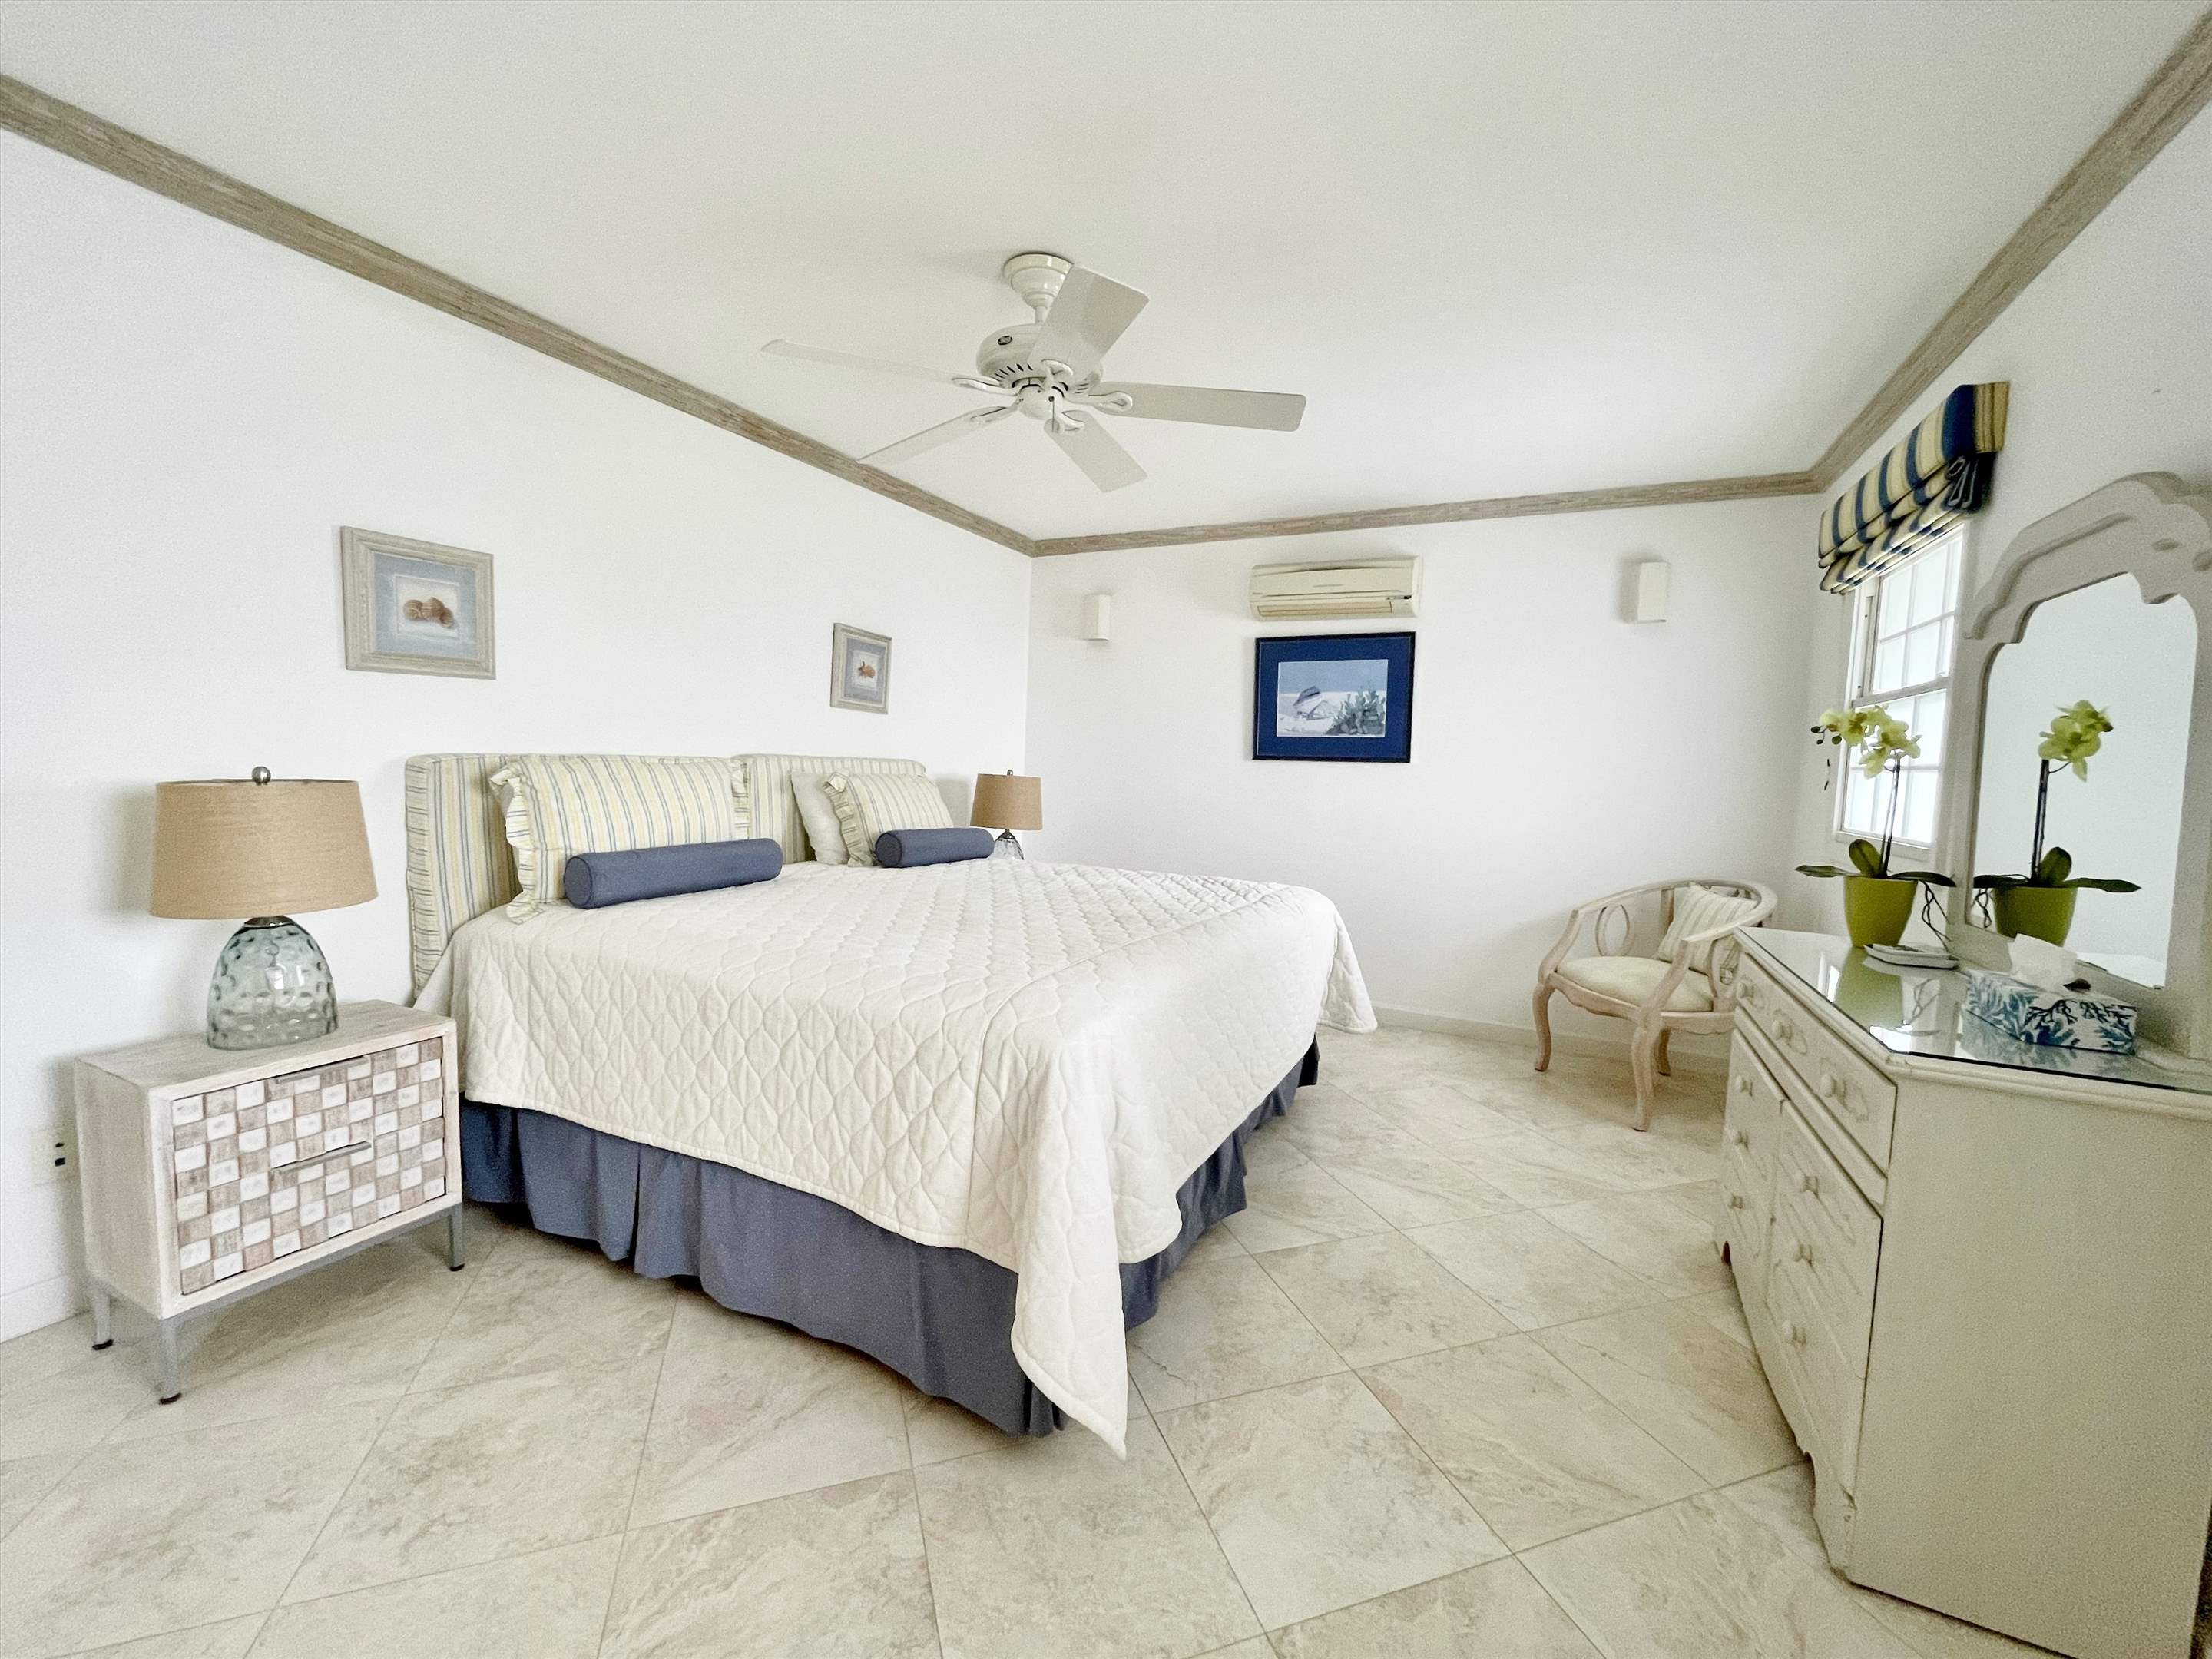 Villas on the Beach 403, 2 bedroom, 2 bedroom apartment in St. James & West Coast, Barbados Photo #13